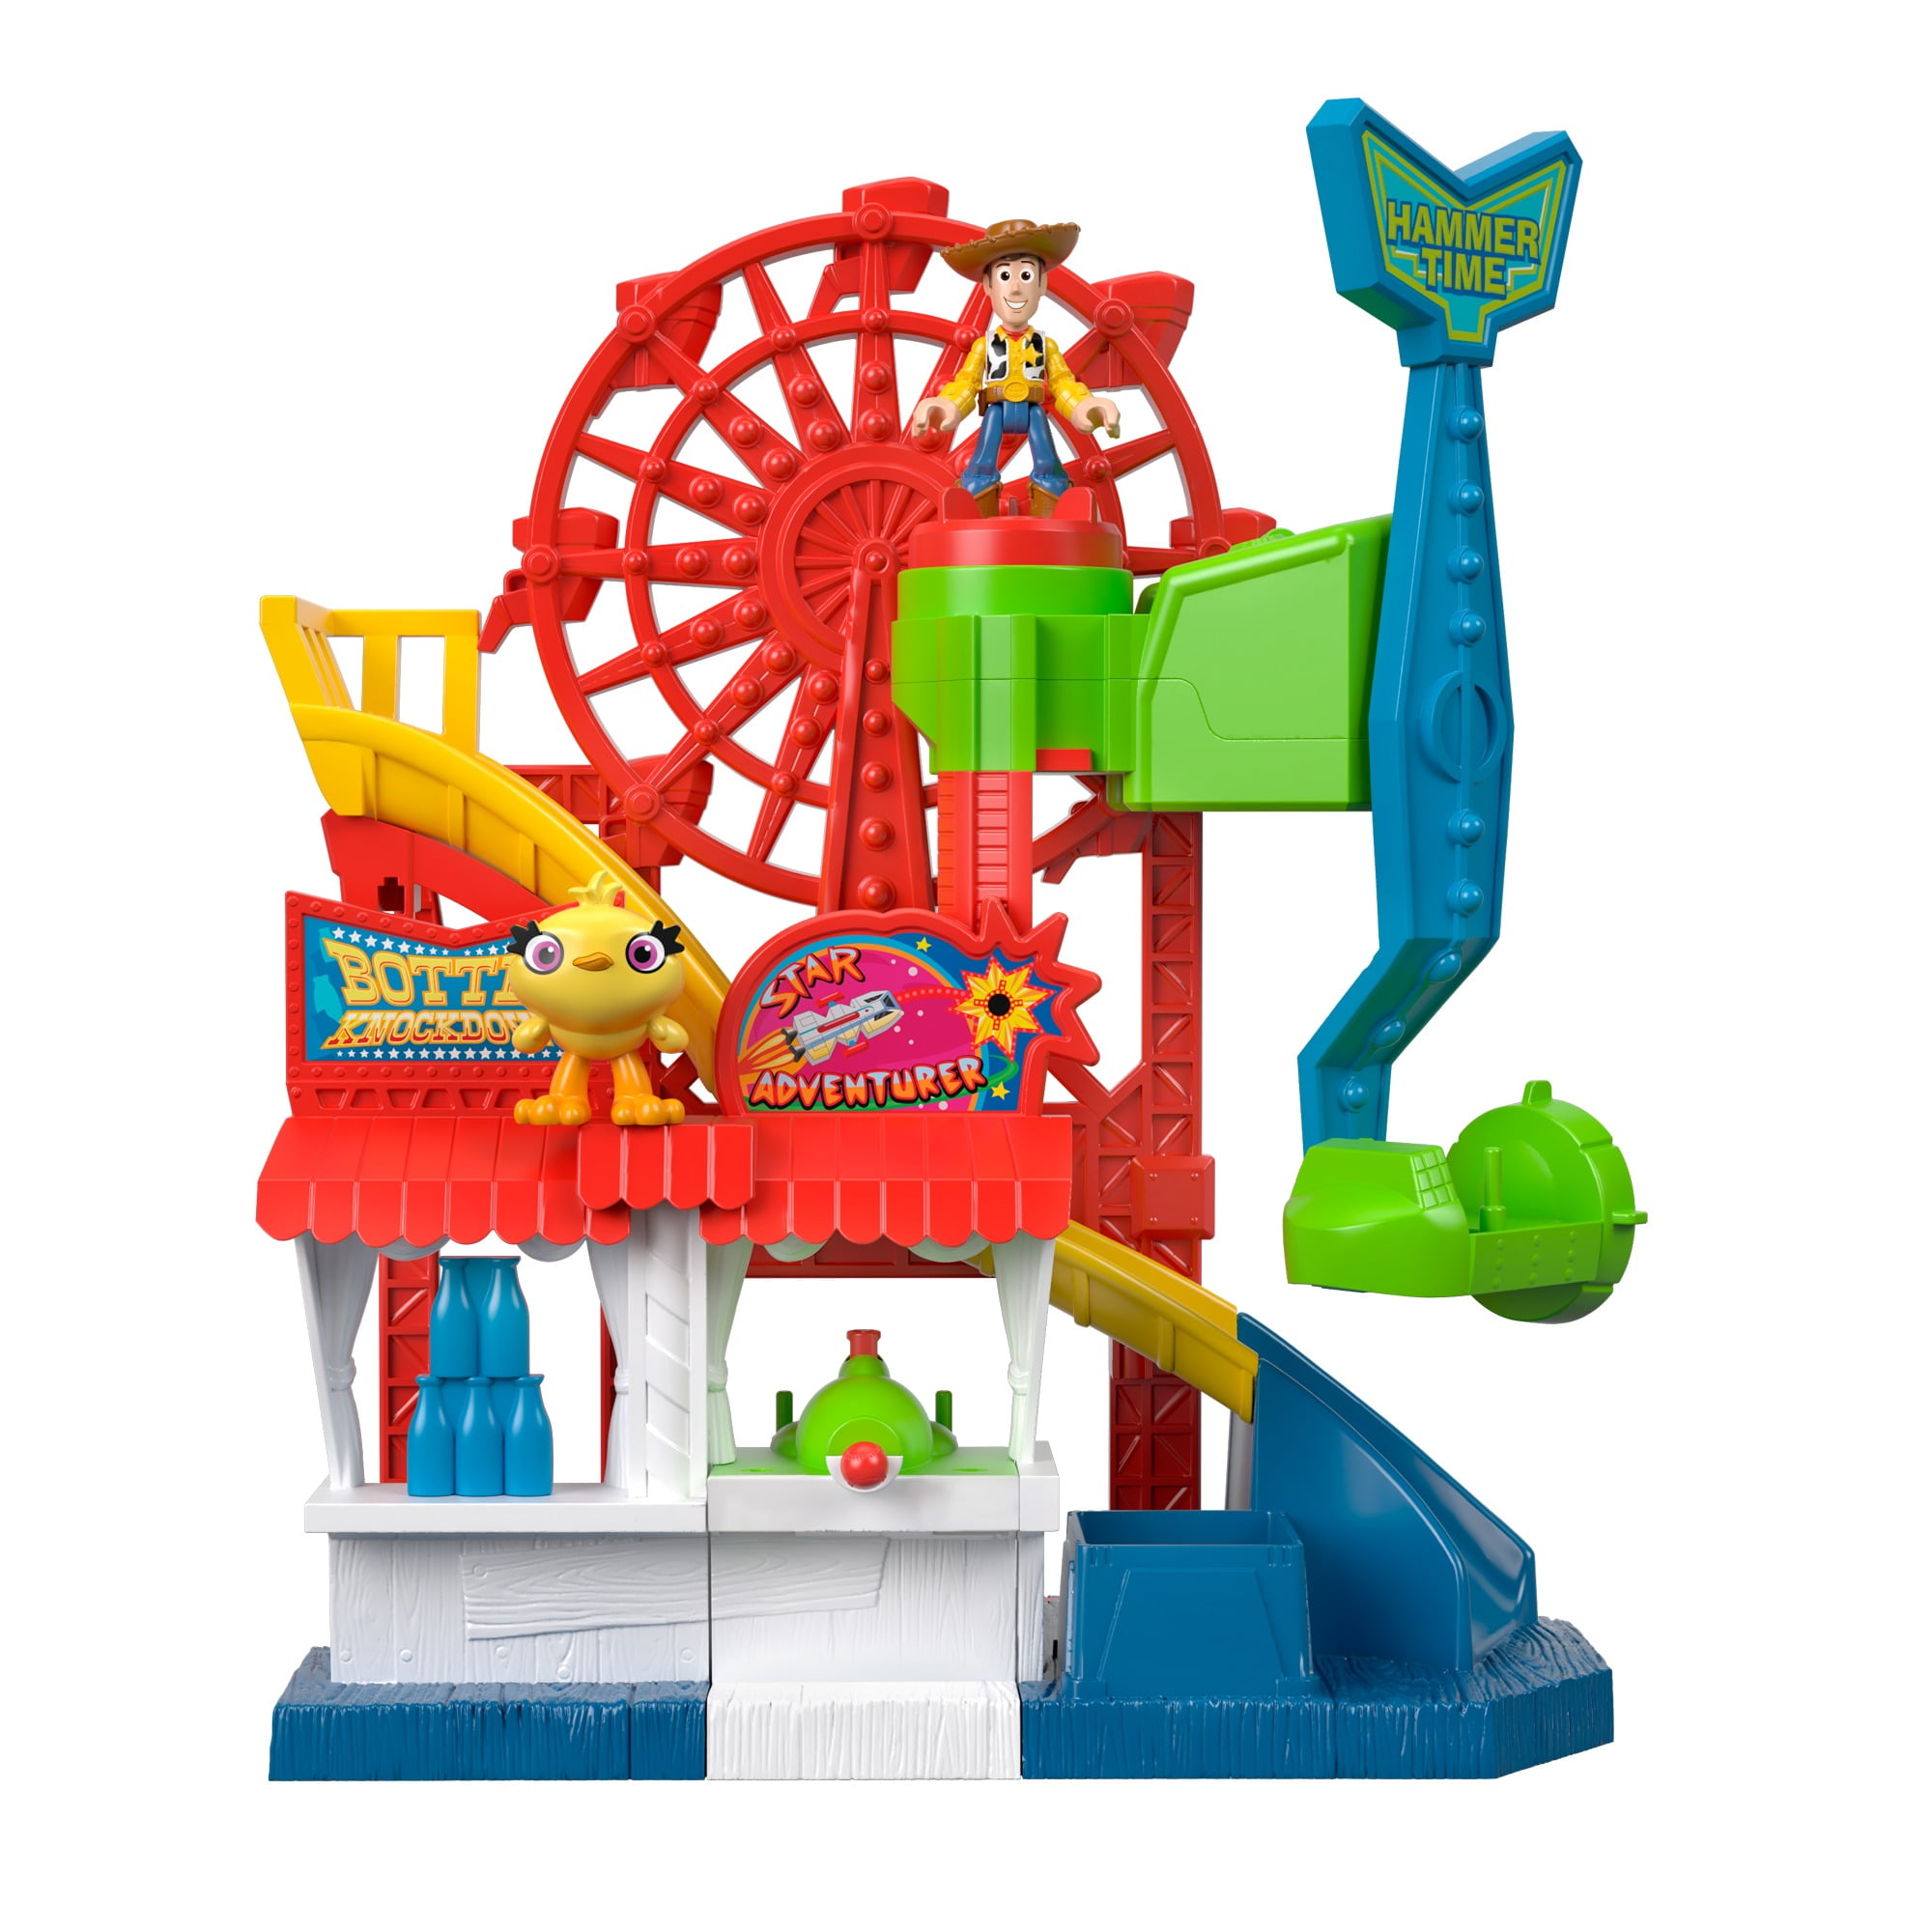 Toy Story 4 Sheriff Woody Carnival Playset Disney Pixar Fisher-Price Imaginext 